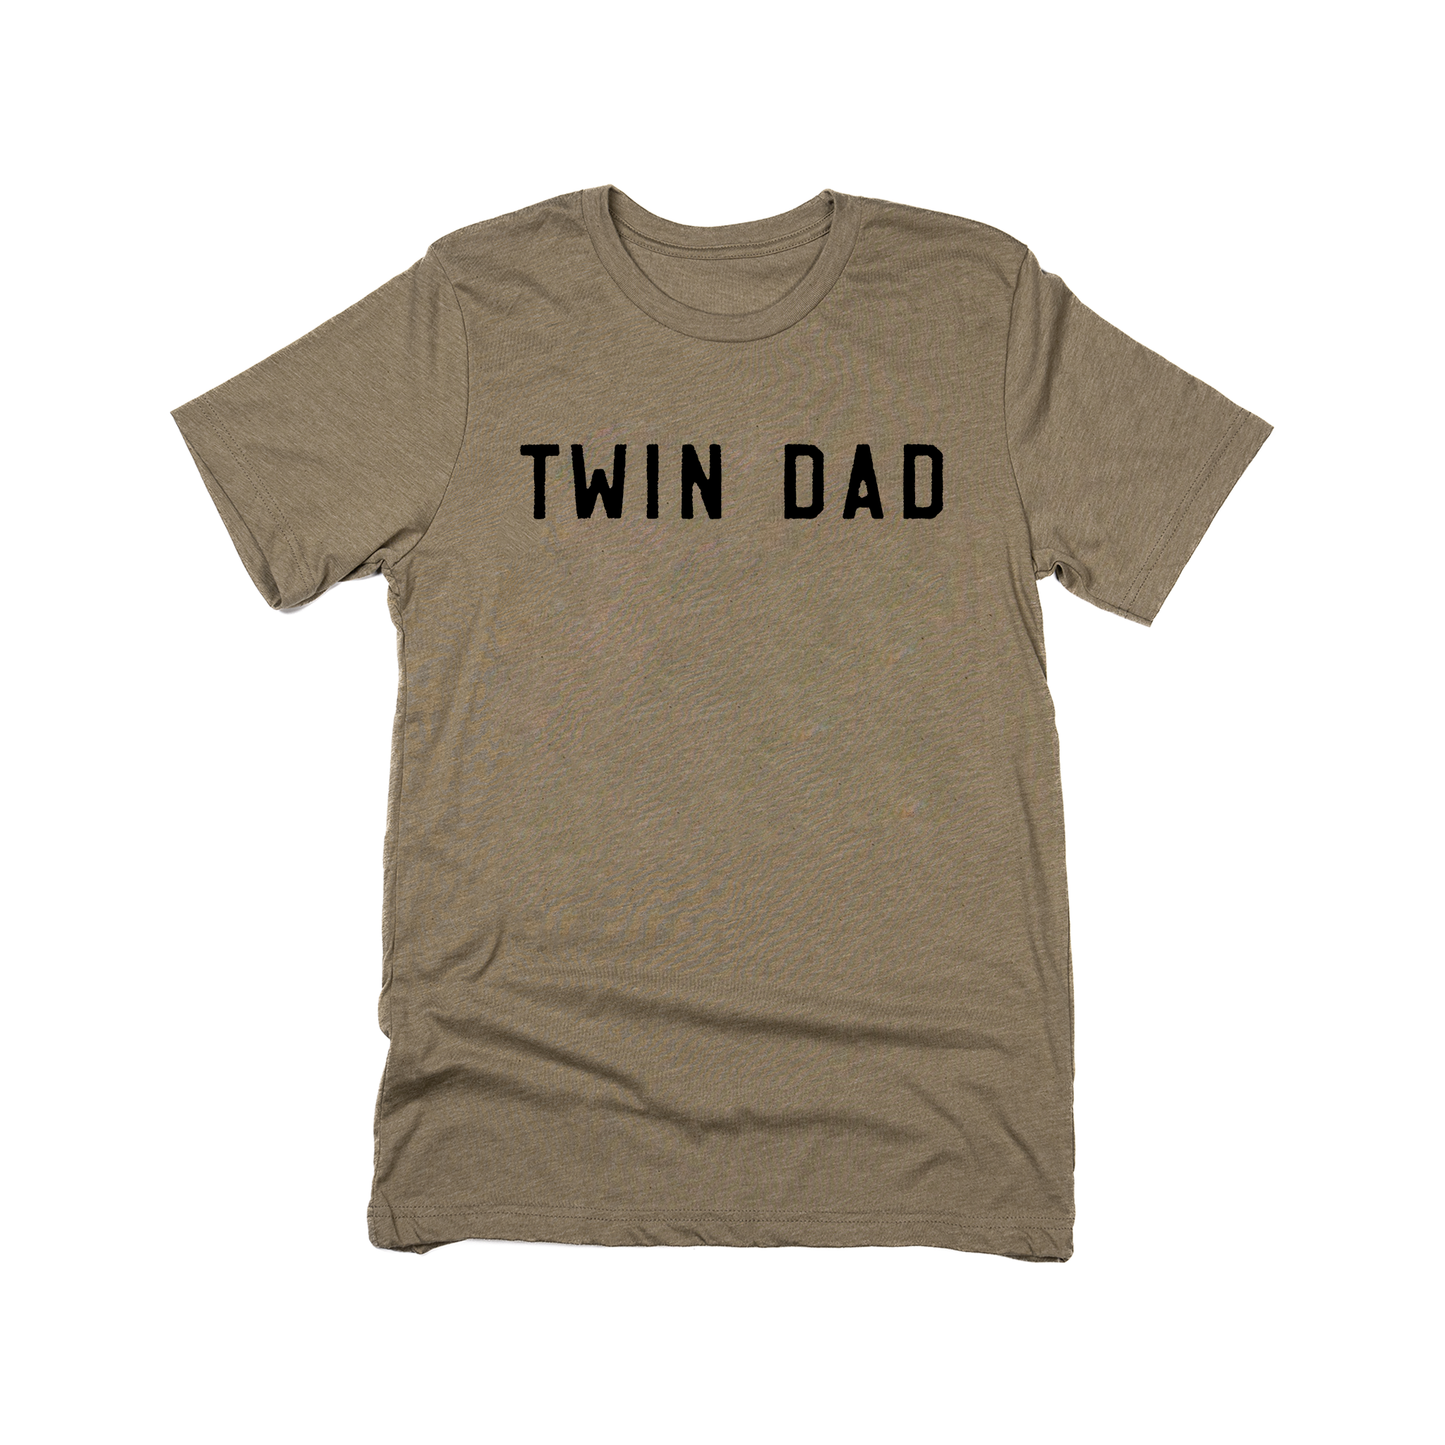 Twin Dad (Black) - Tee (Olive)